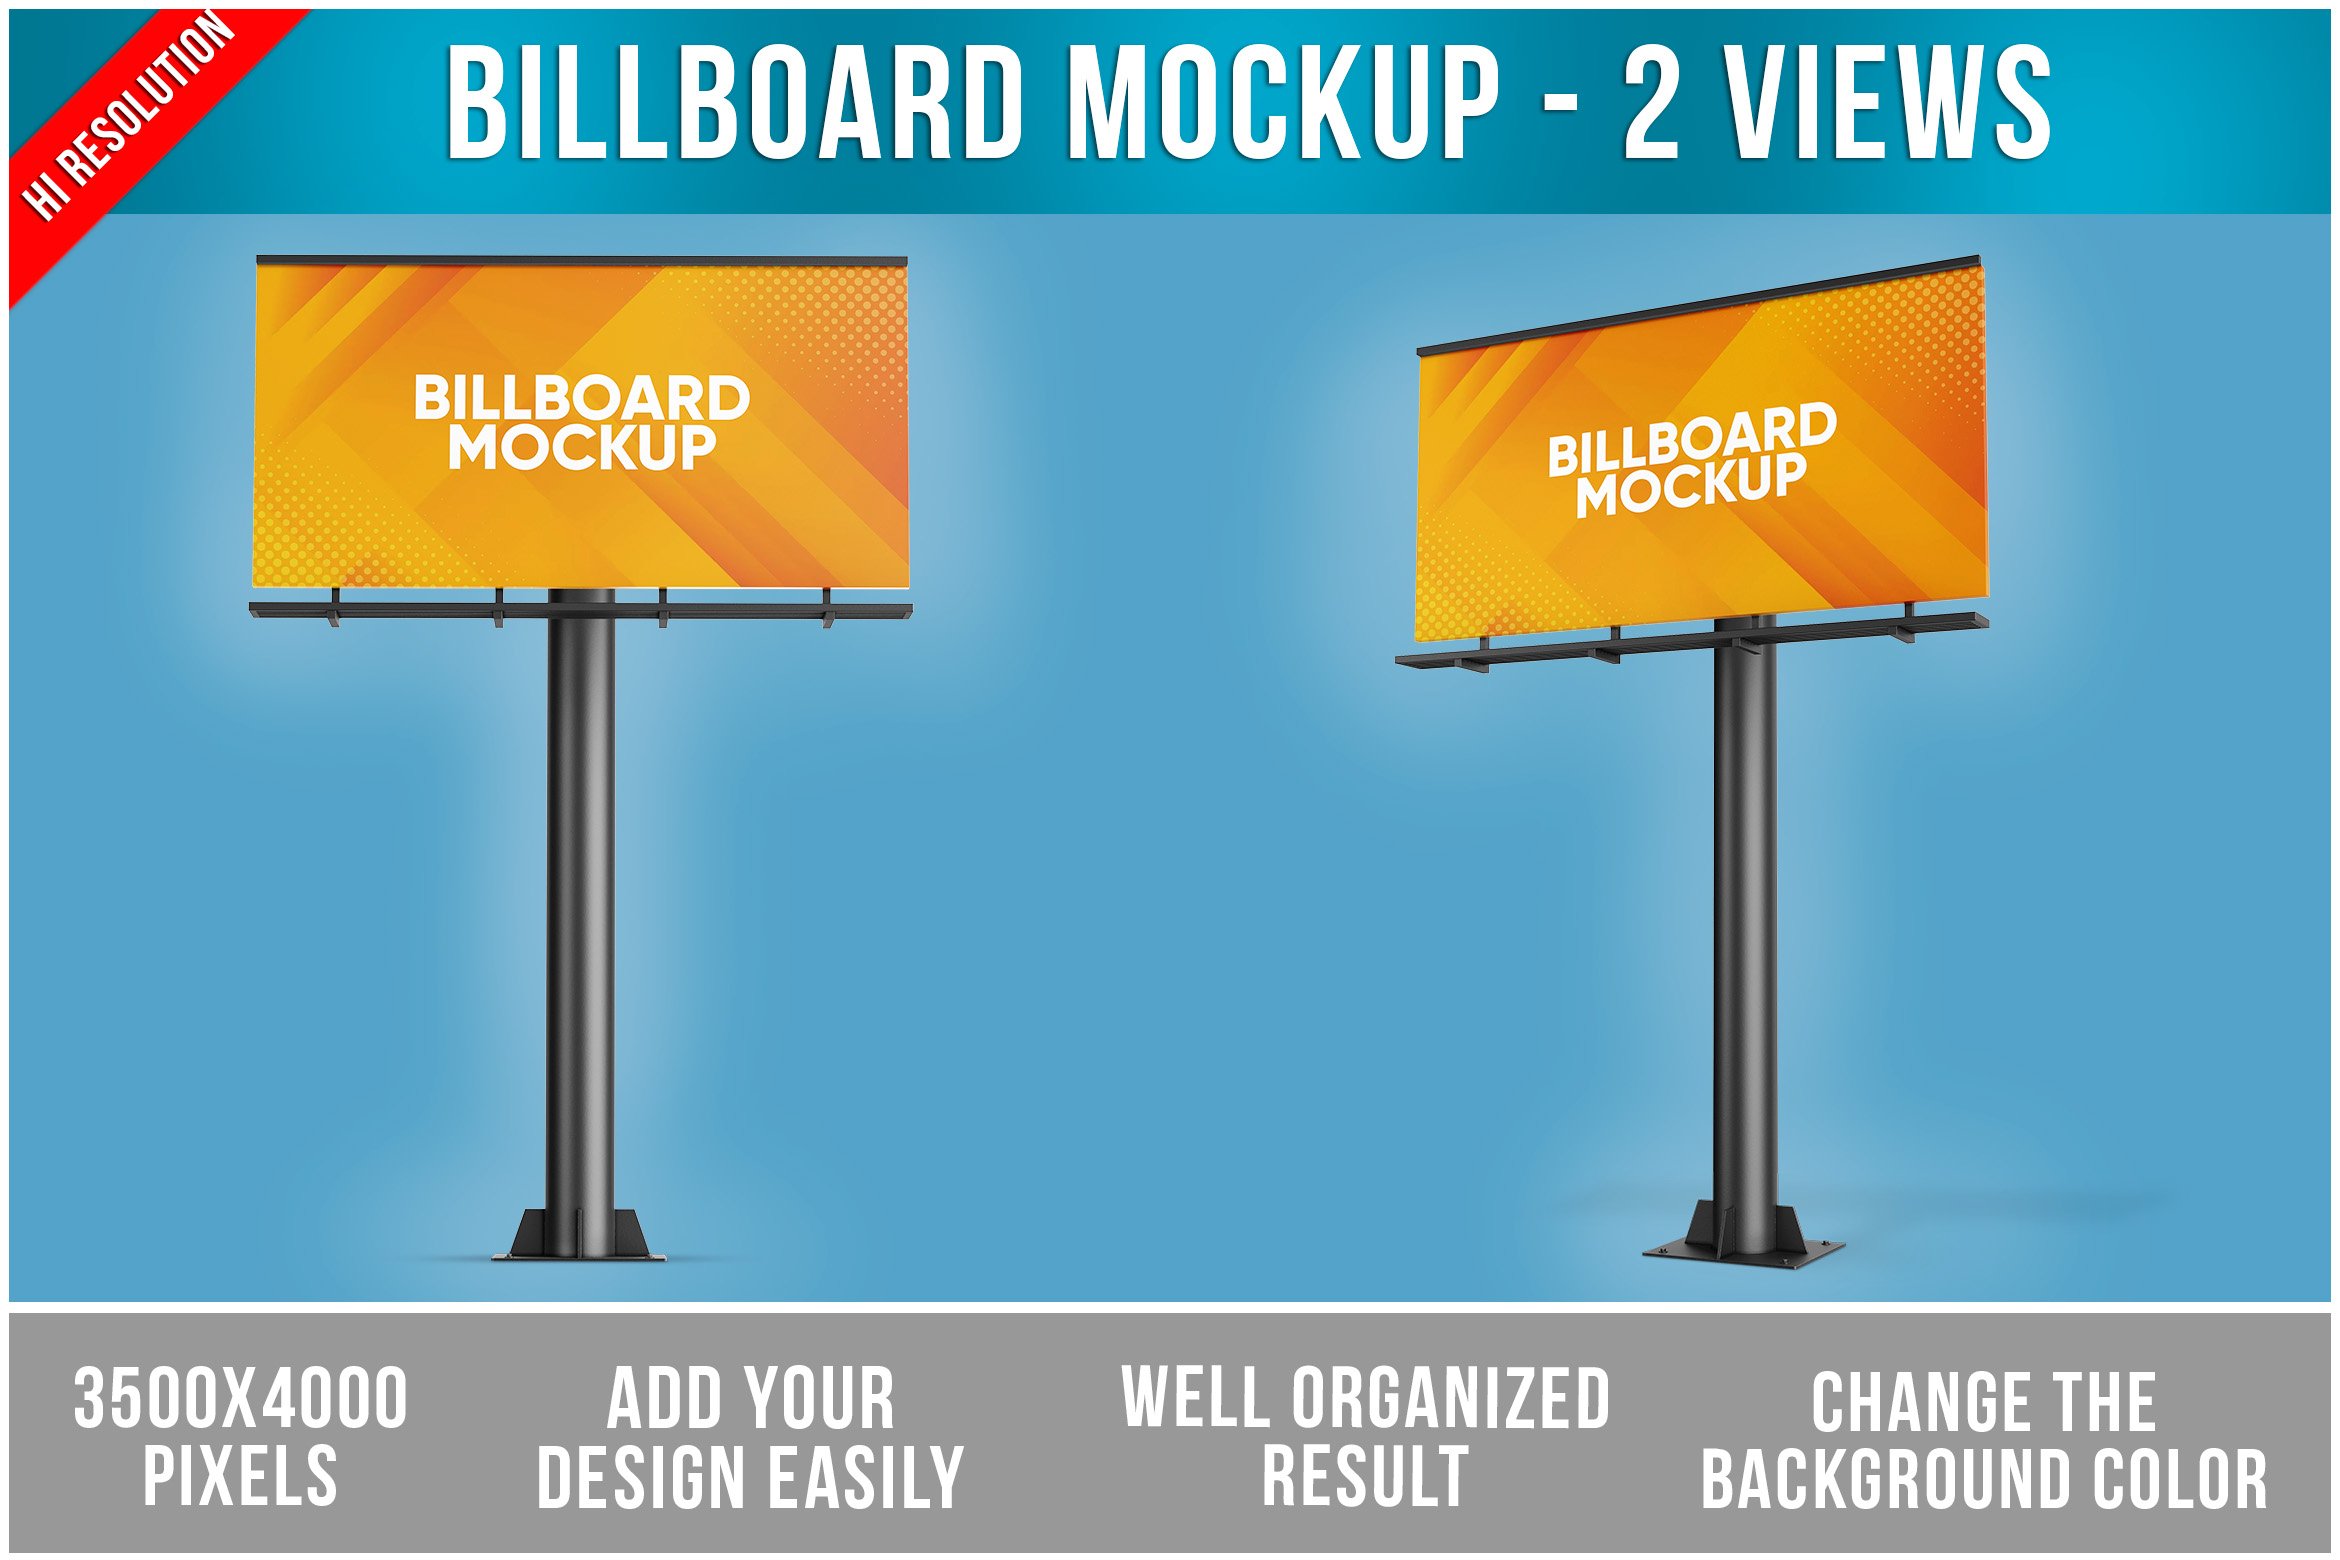 Billboard Mockup - 2 Views cover image.